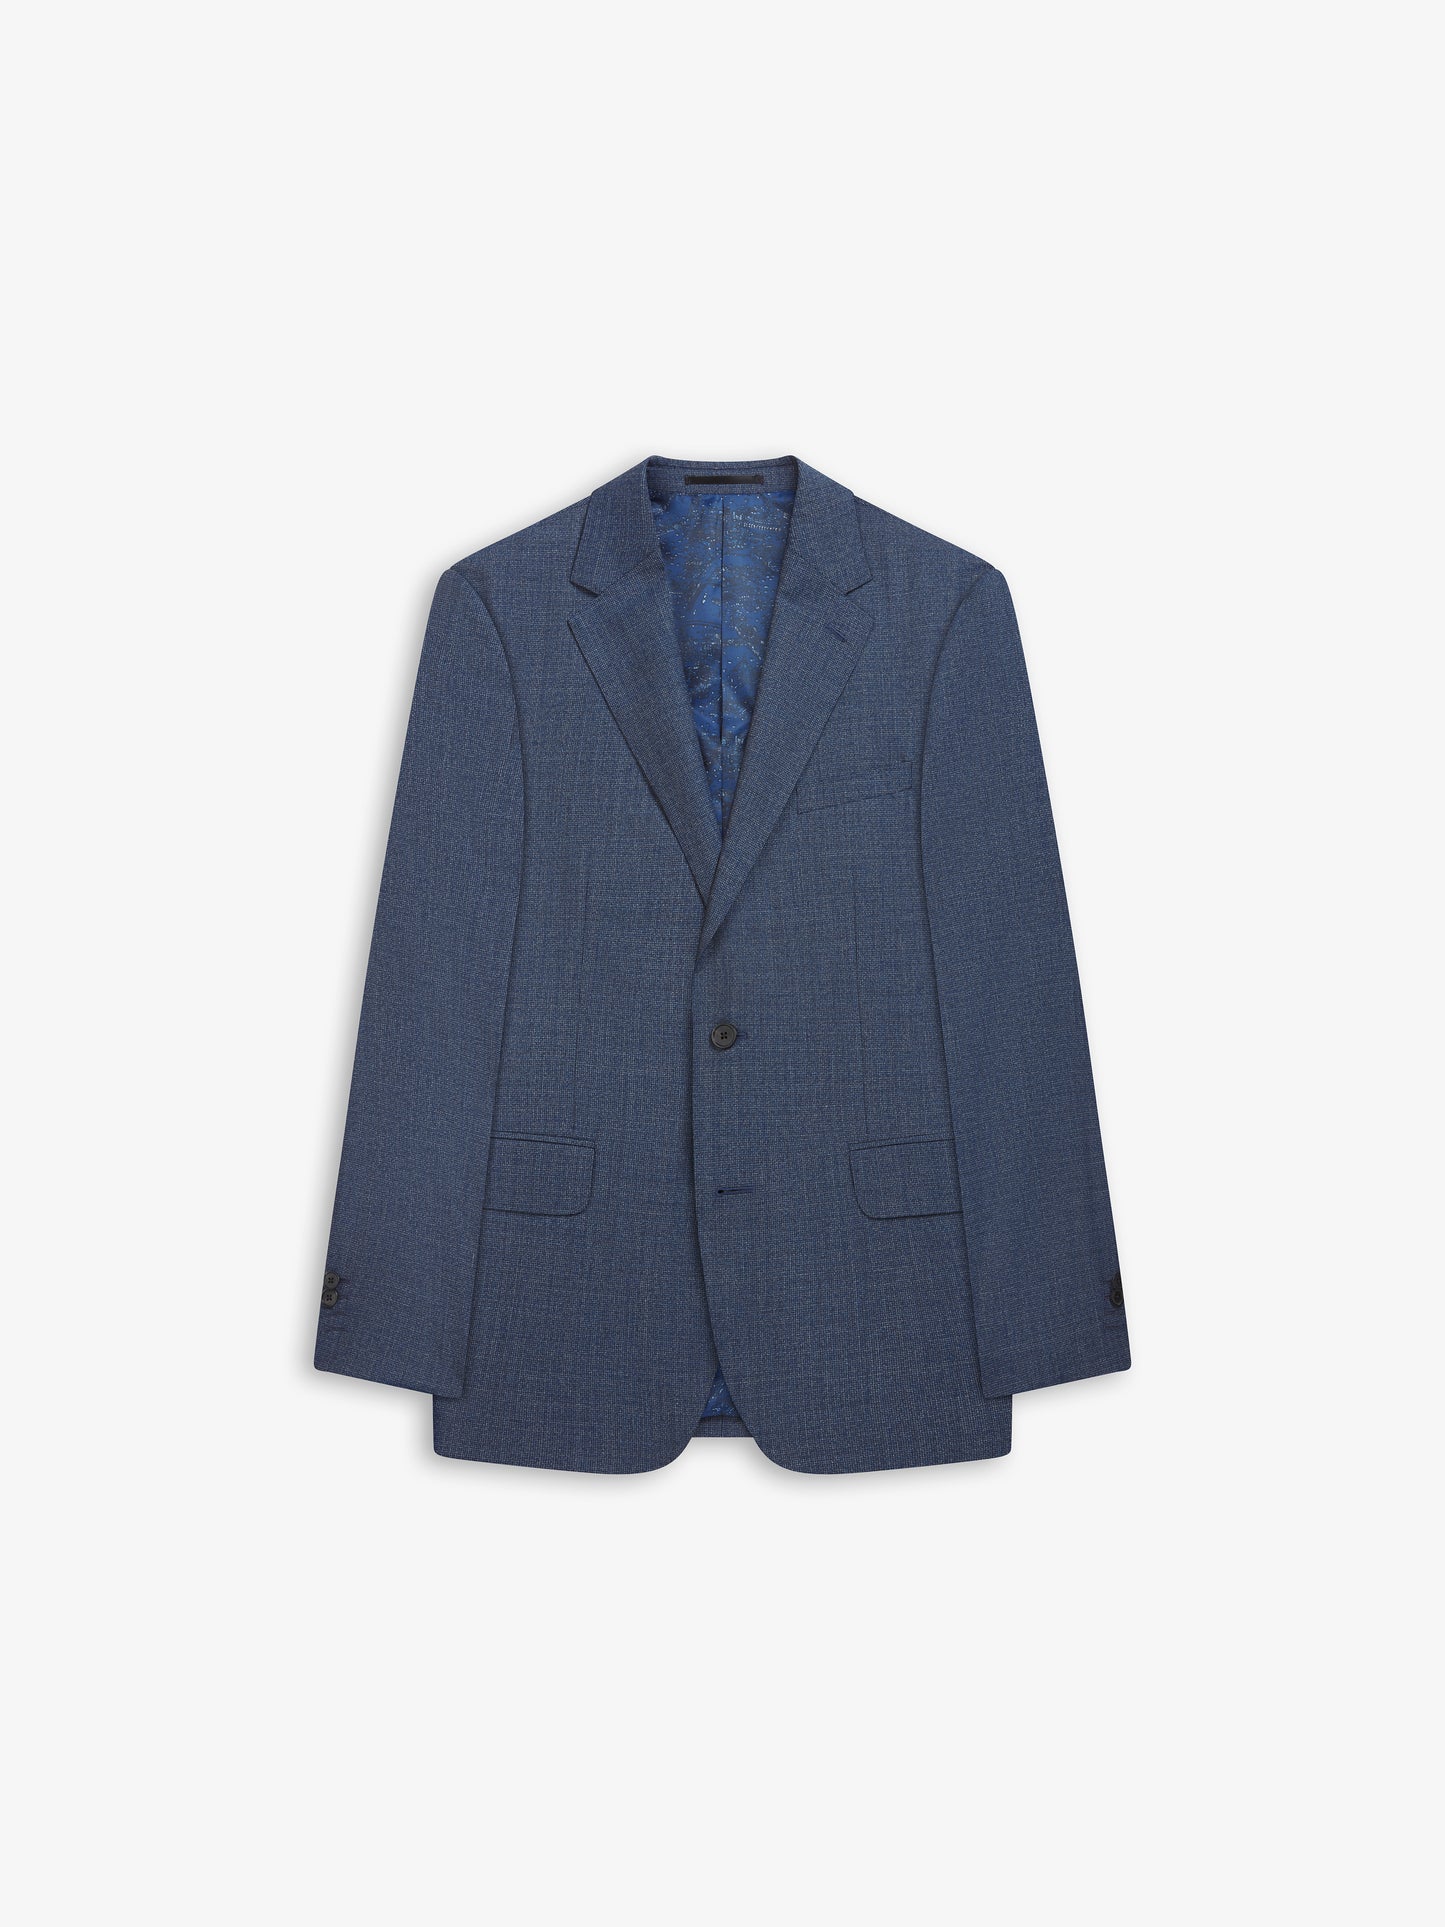 Caselli Zegna Slim Fit Navy Blue Textured Jacket